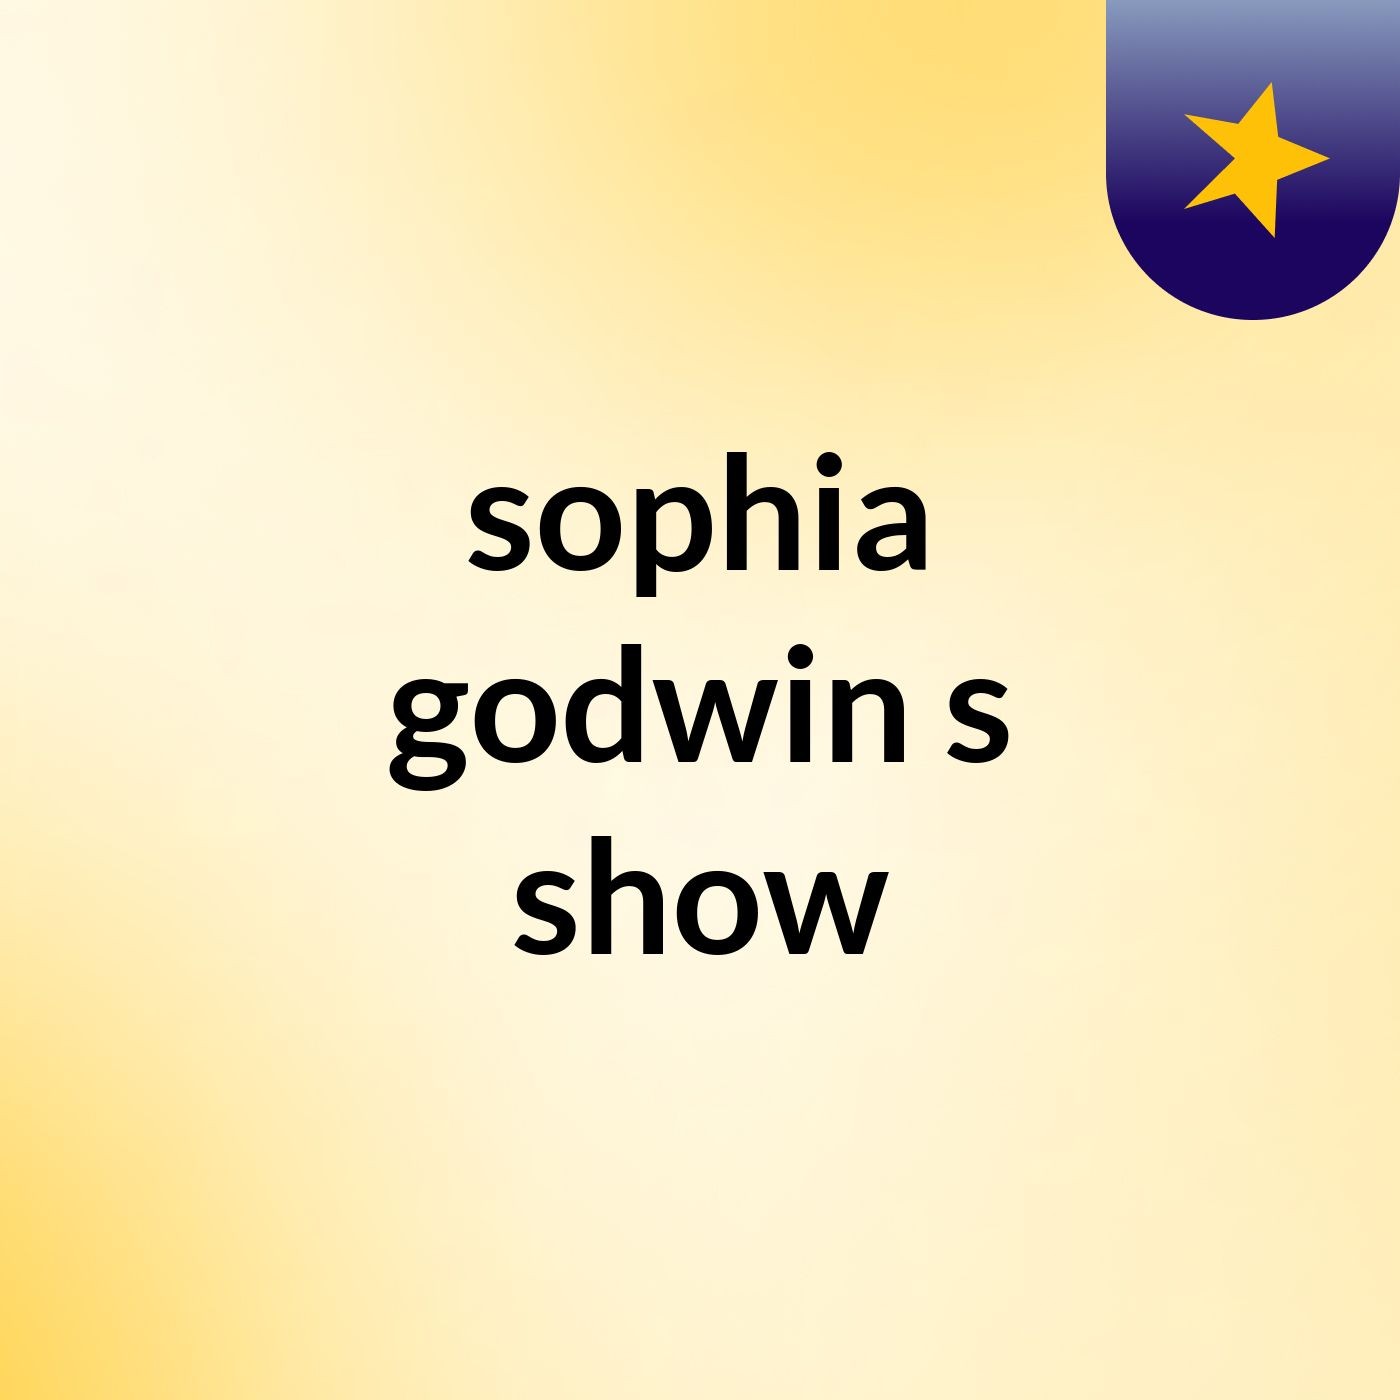 sophia godwin's show